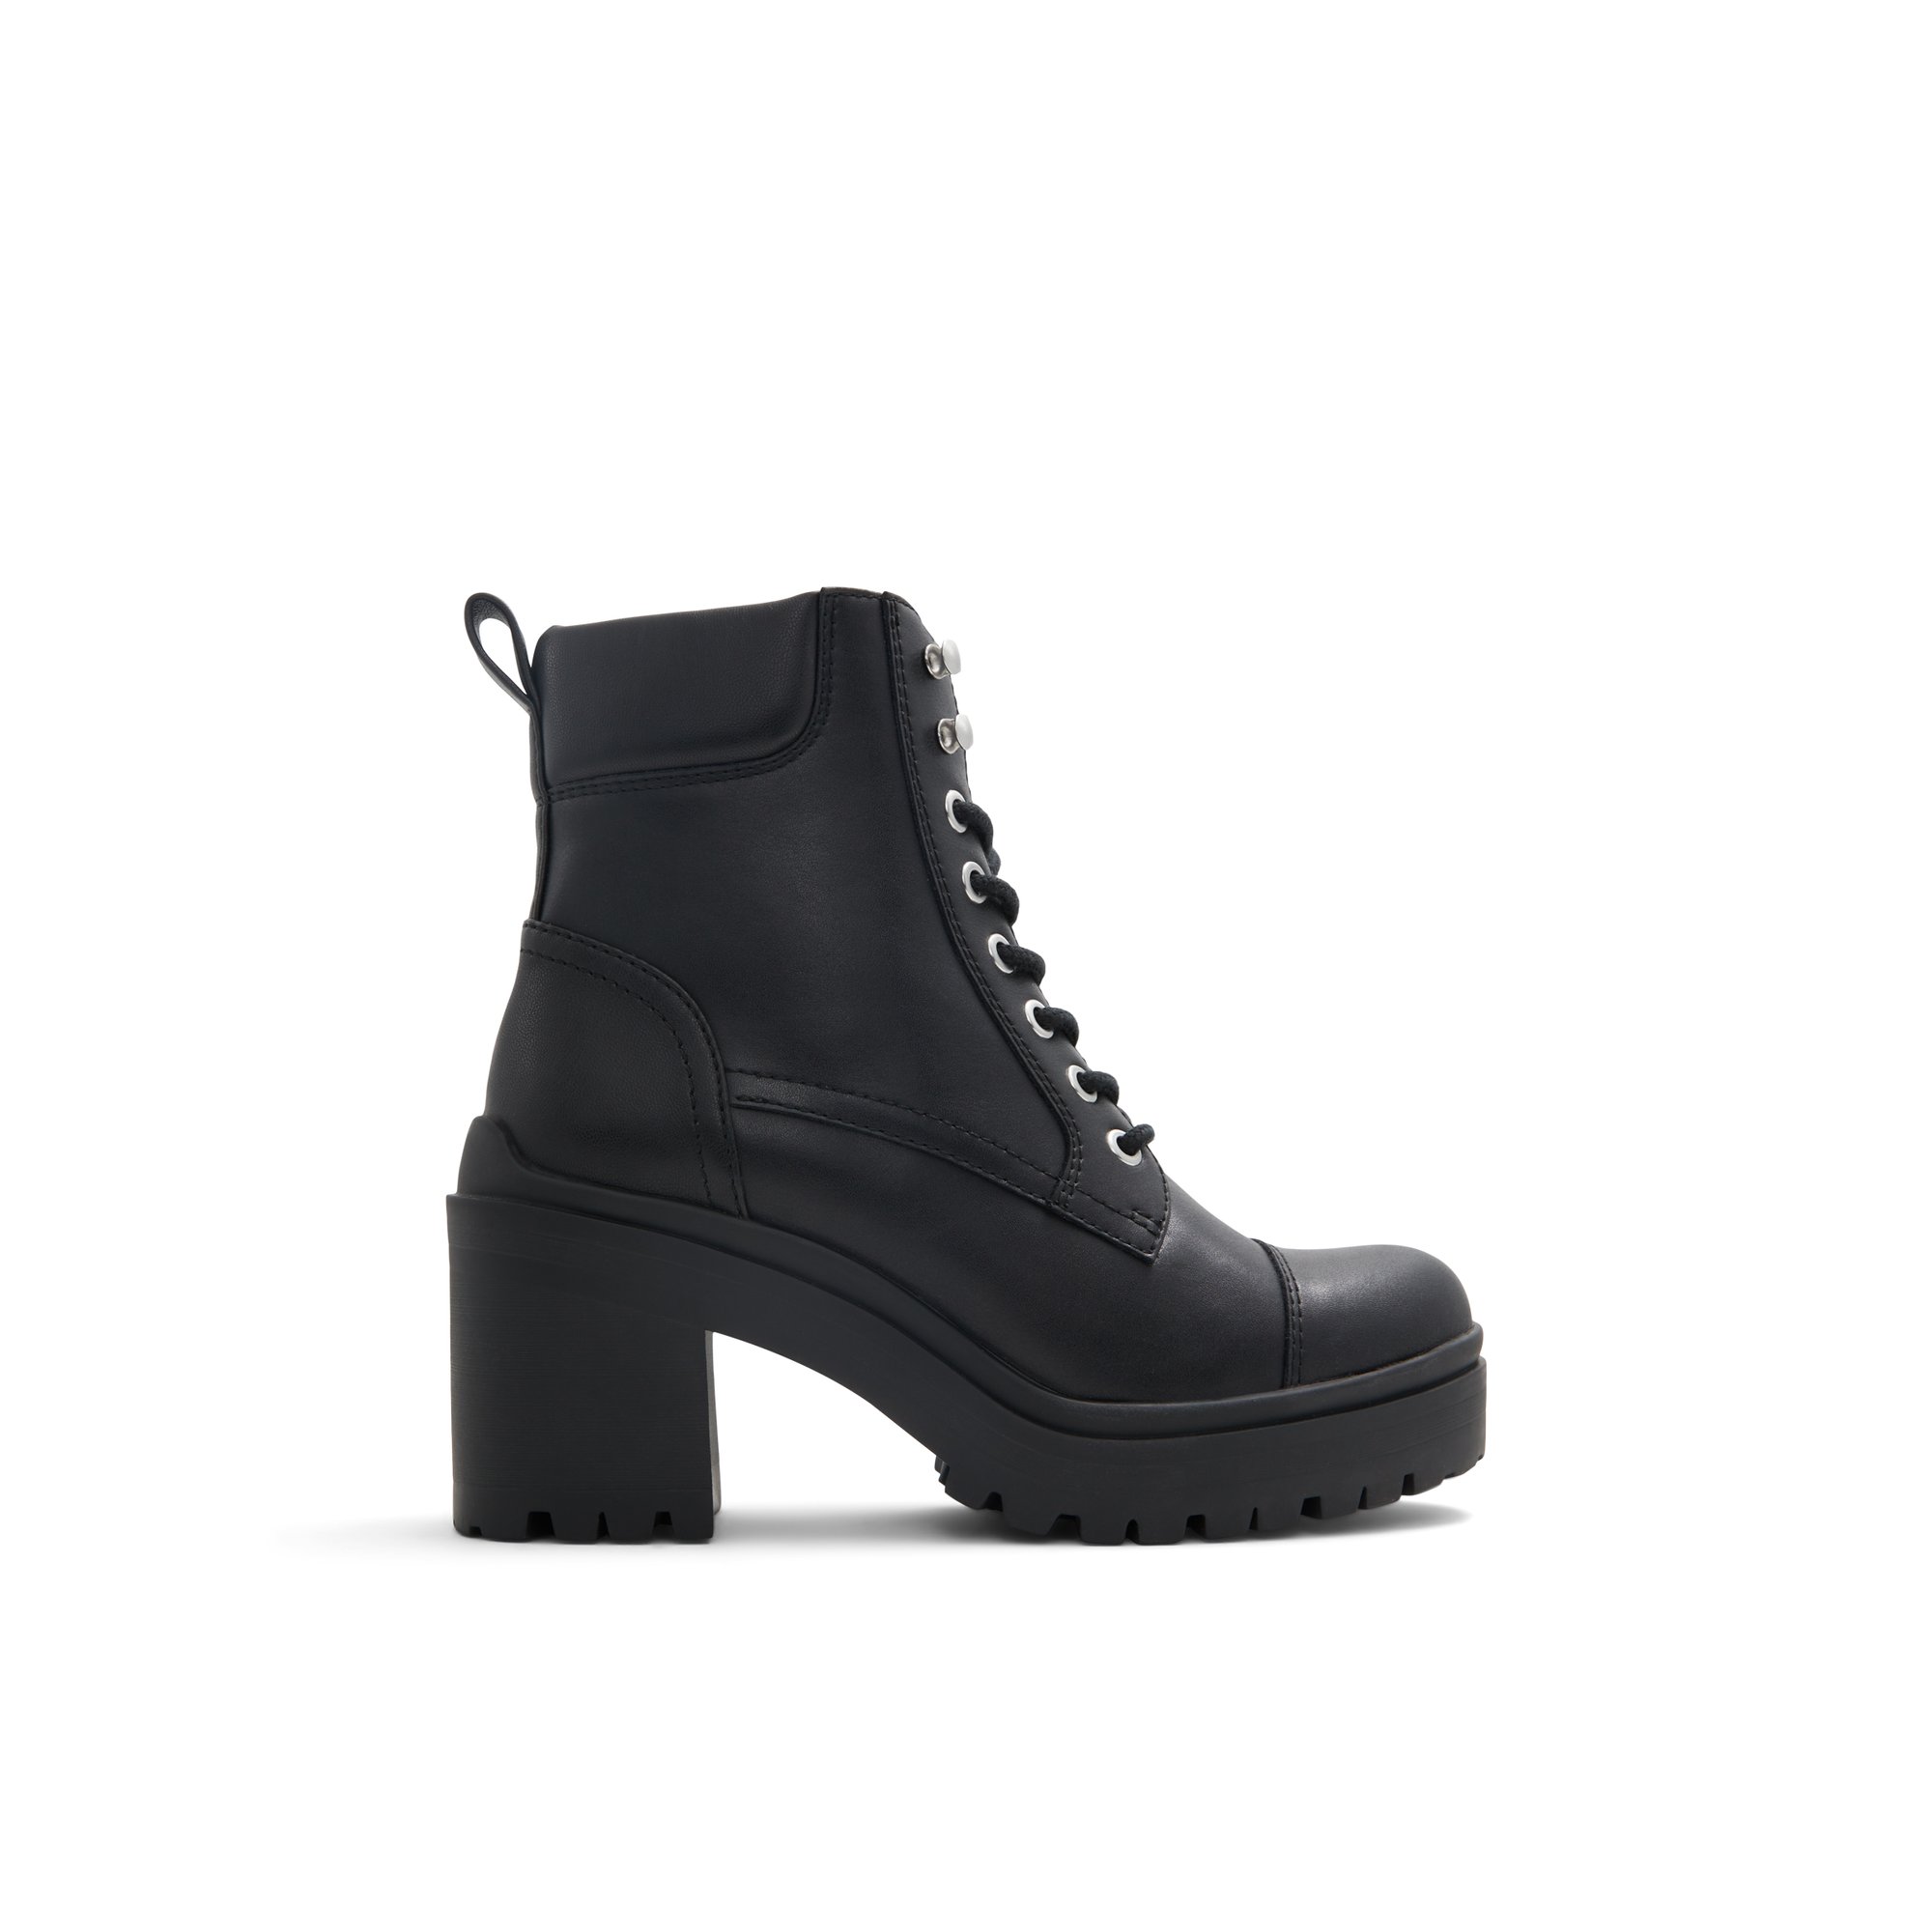 ALDO Alique - Women's Winter Boot - Black